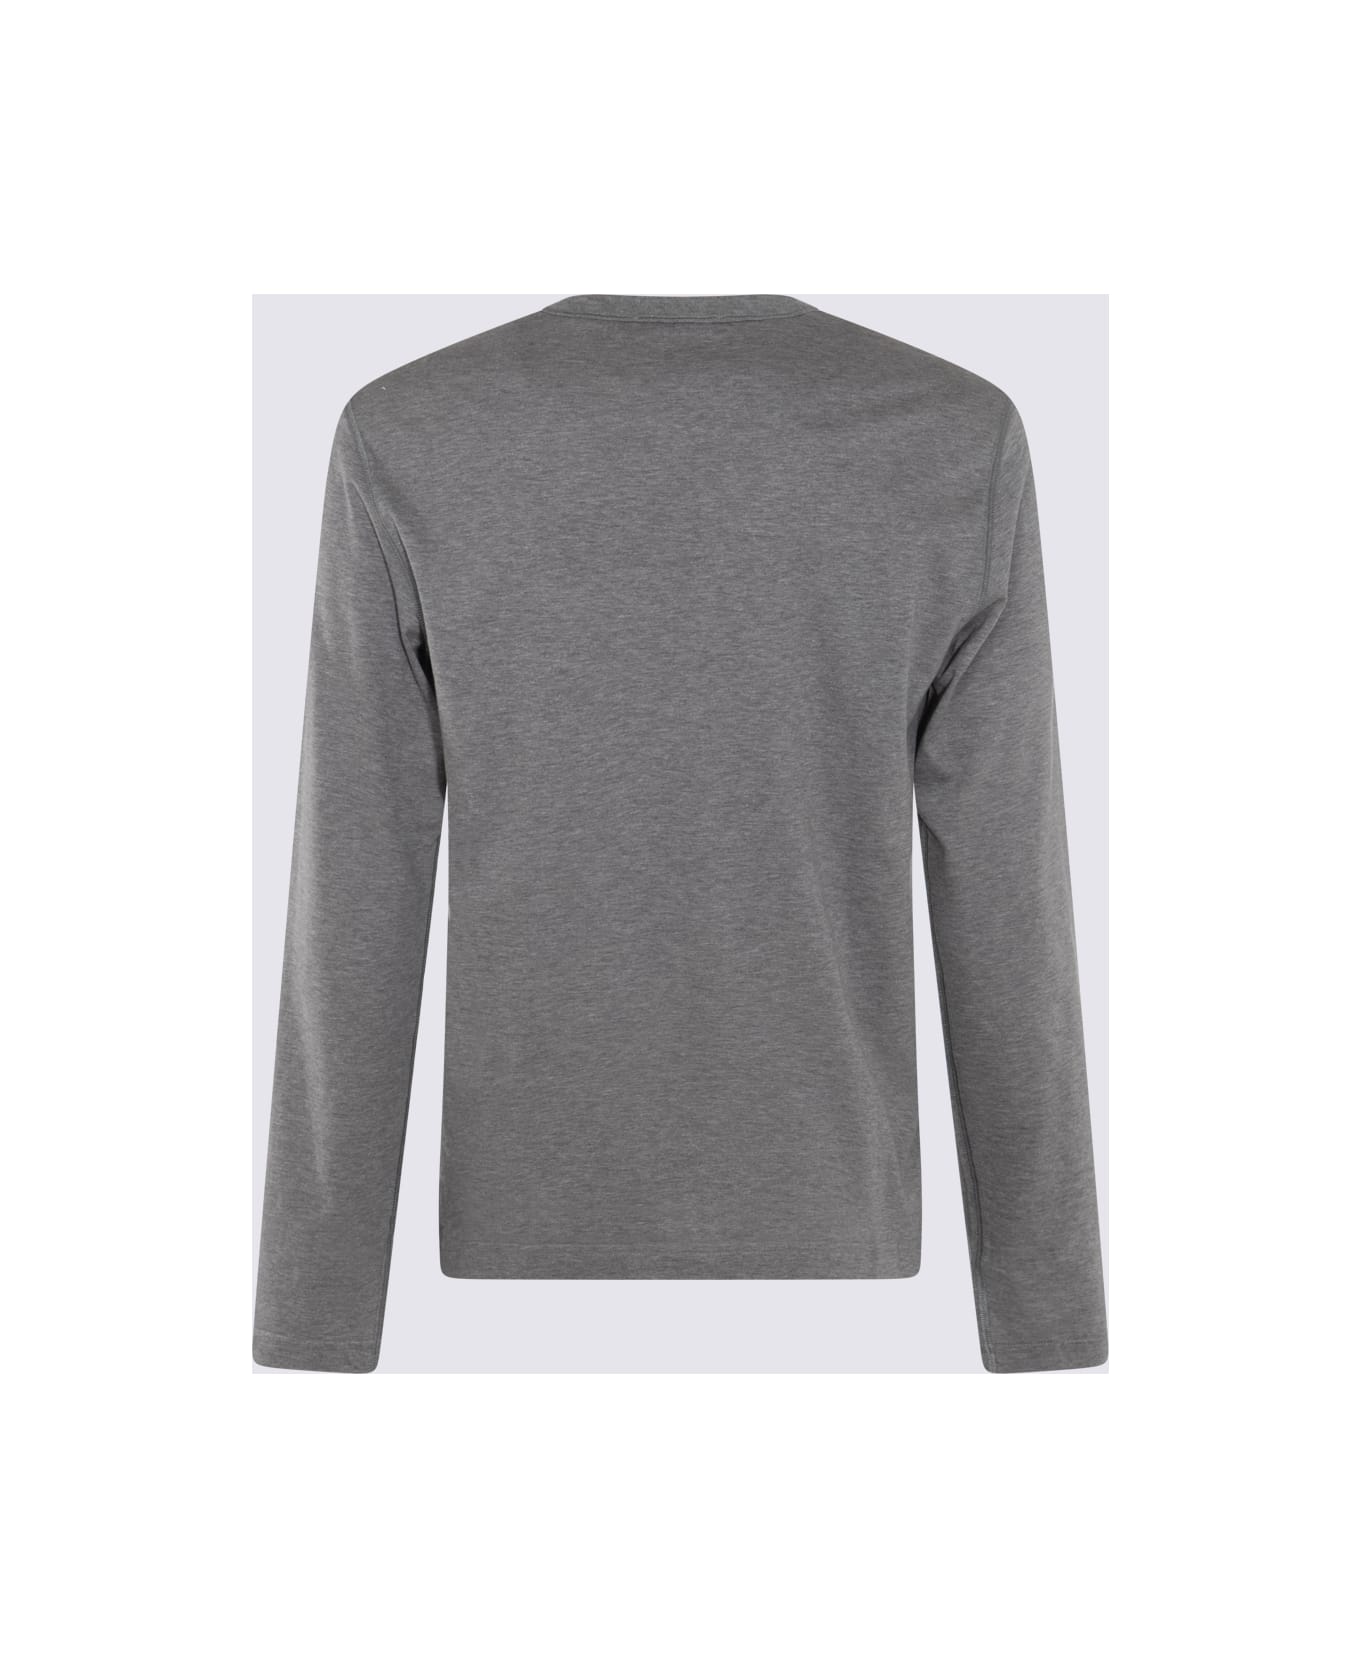 Dolce & Gabbana Grey Cotton T-shirt - MELANGE GRIGI